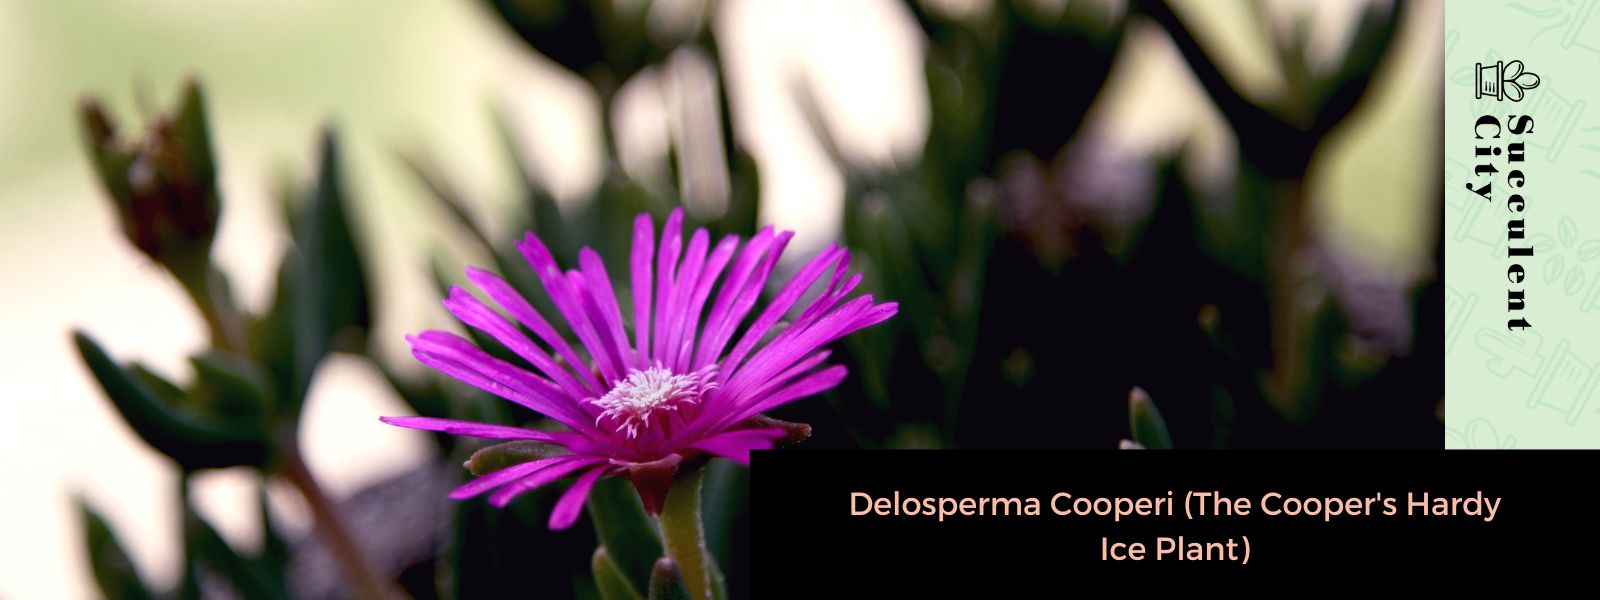 Delosperma Cooperi (La planta de hielo Cooper's Hardy)